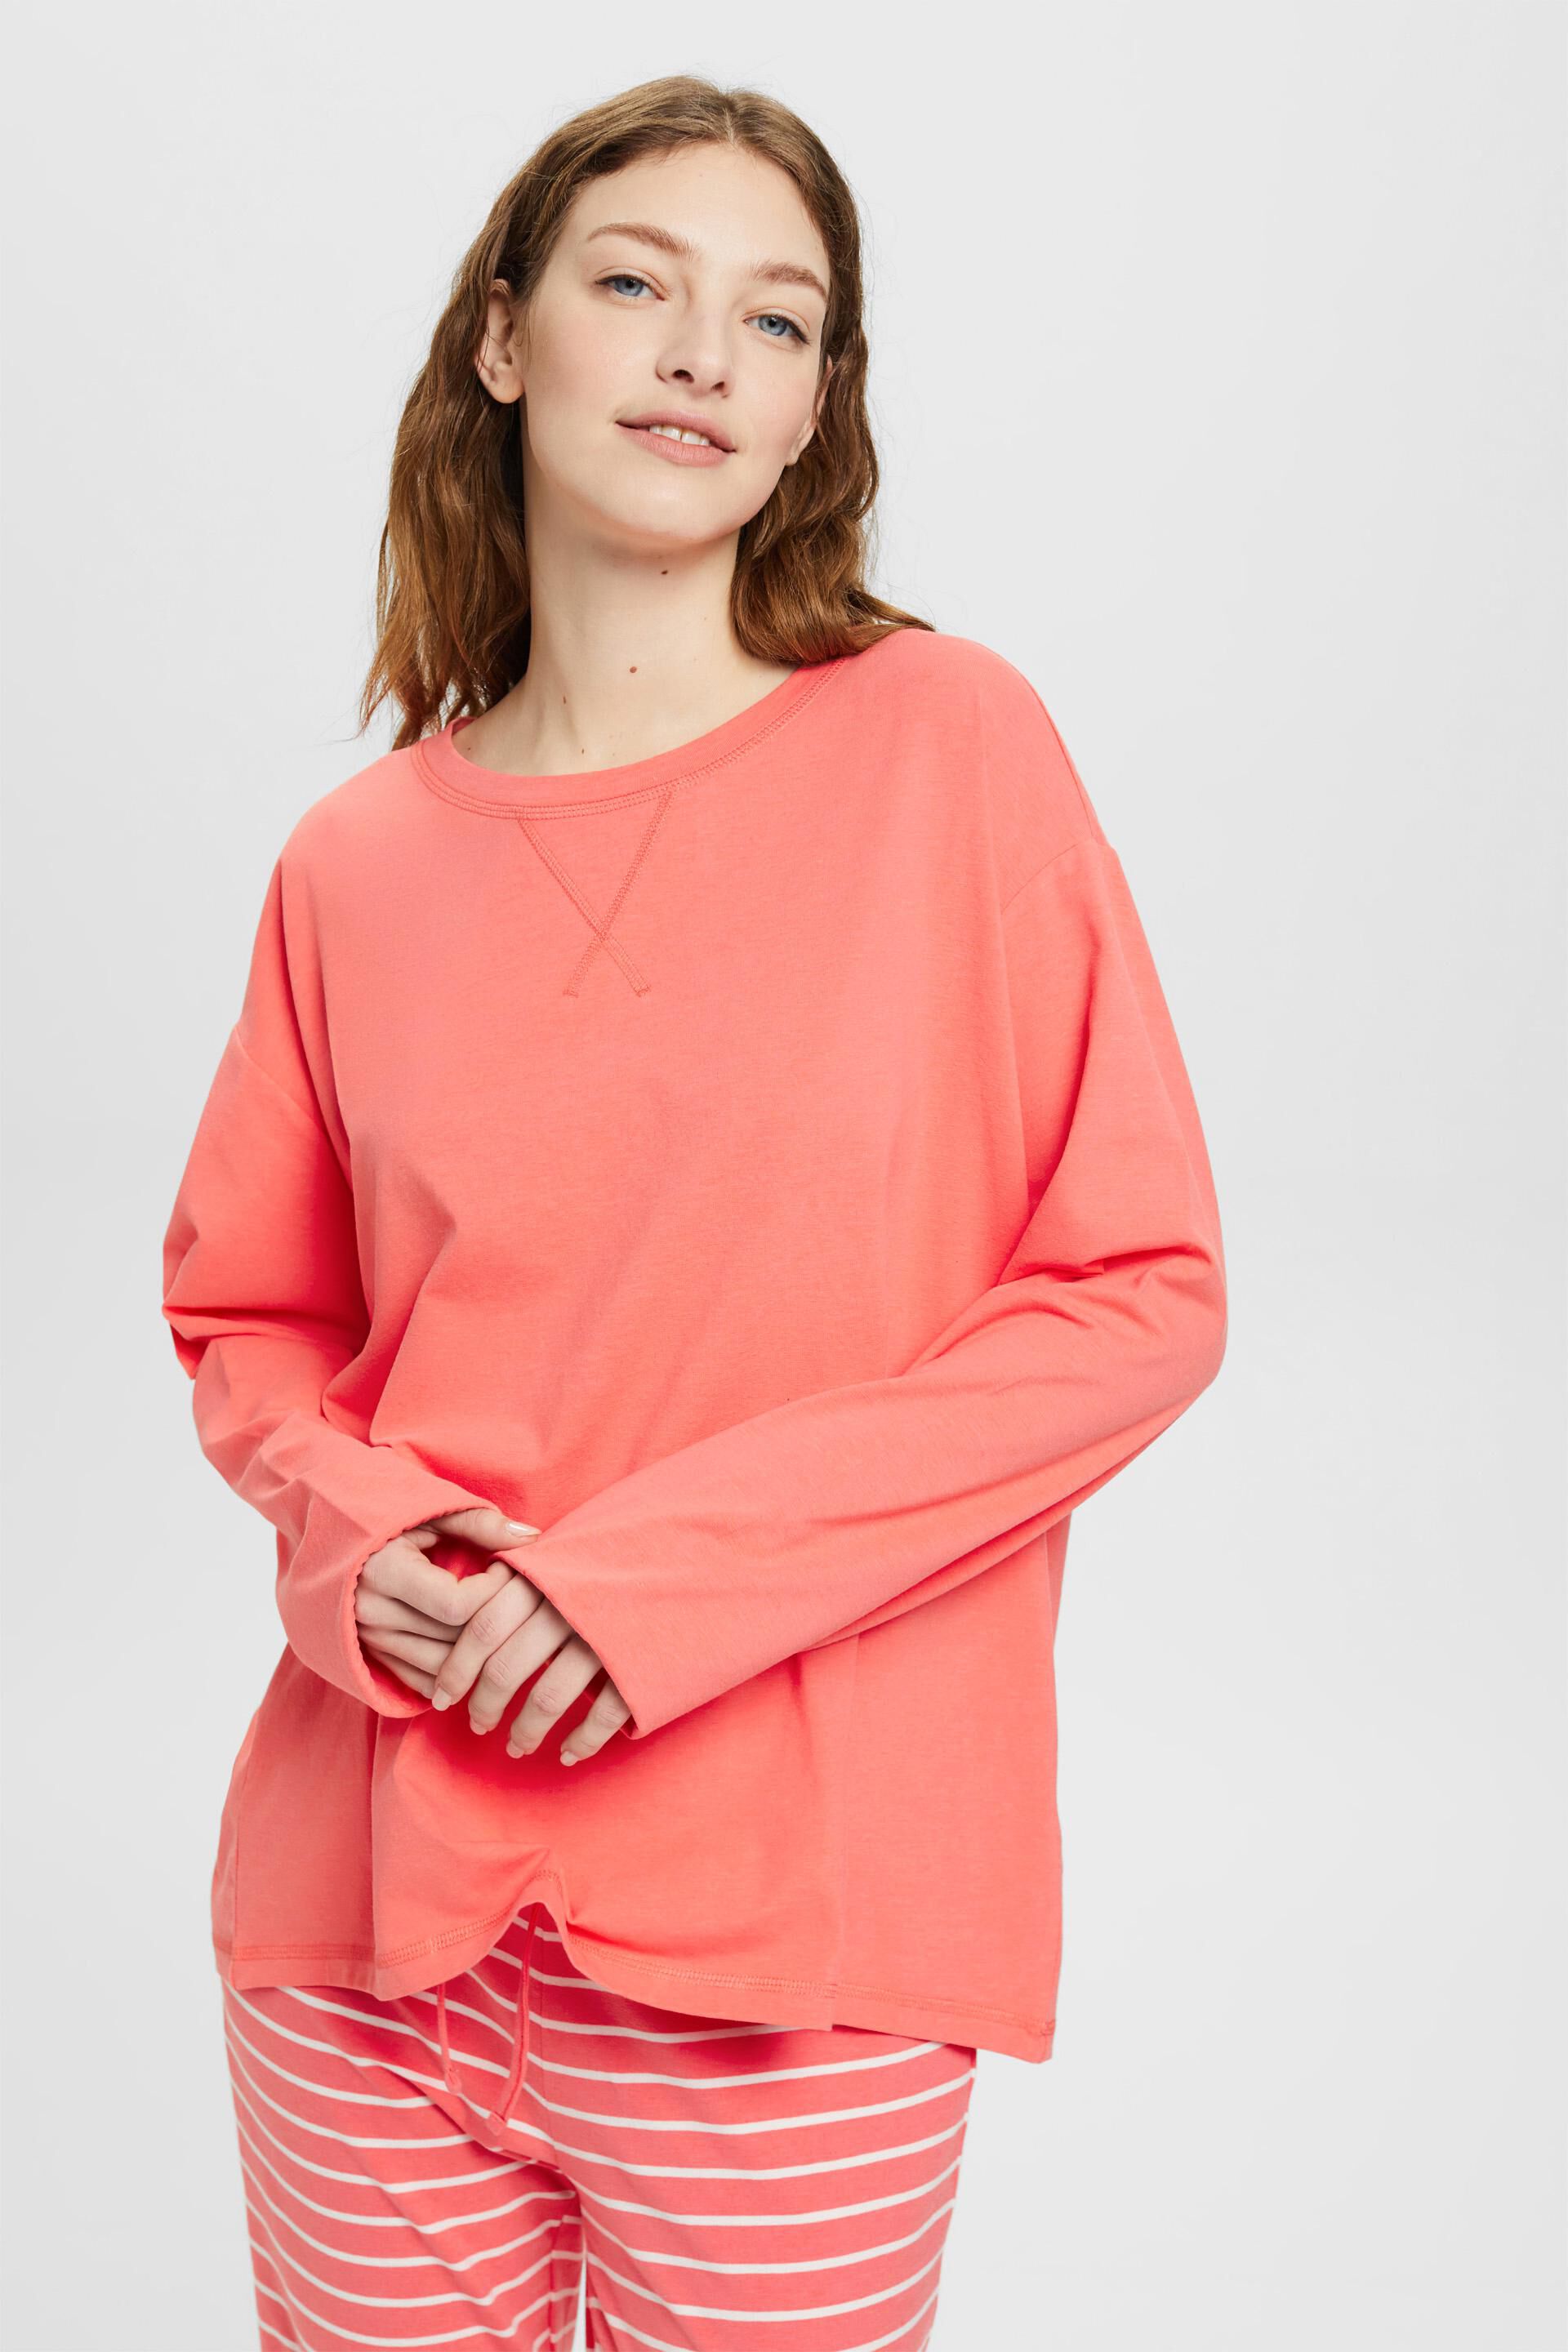 Esprit top pyjama Long-sleeved